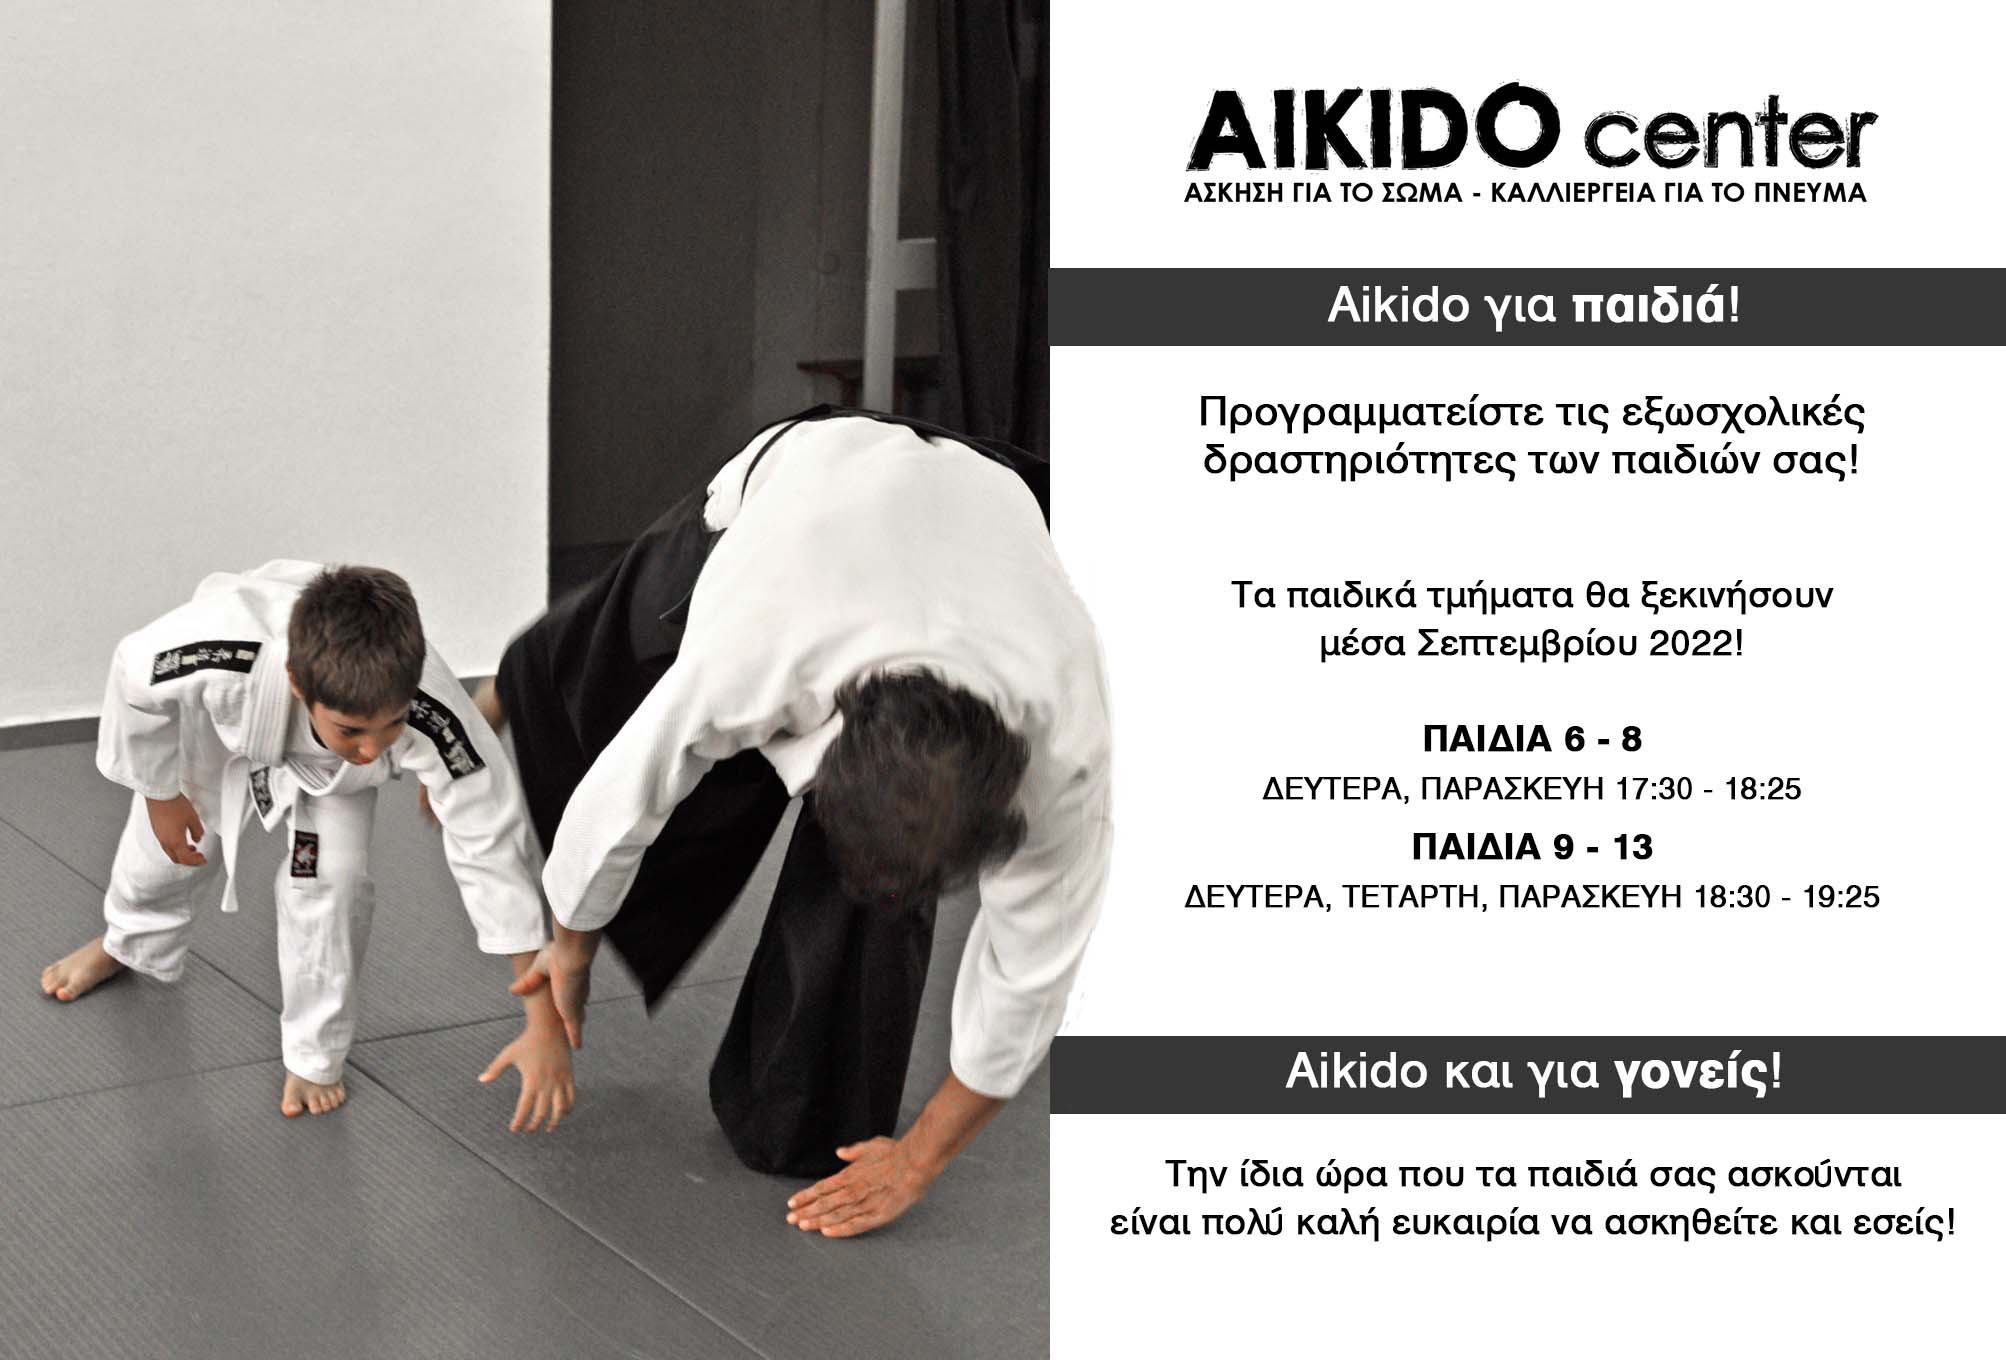 Aikido center